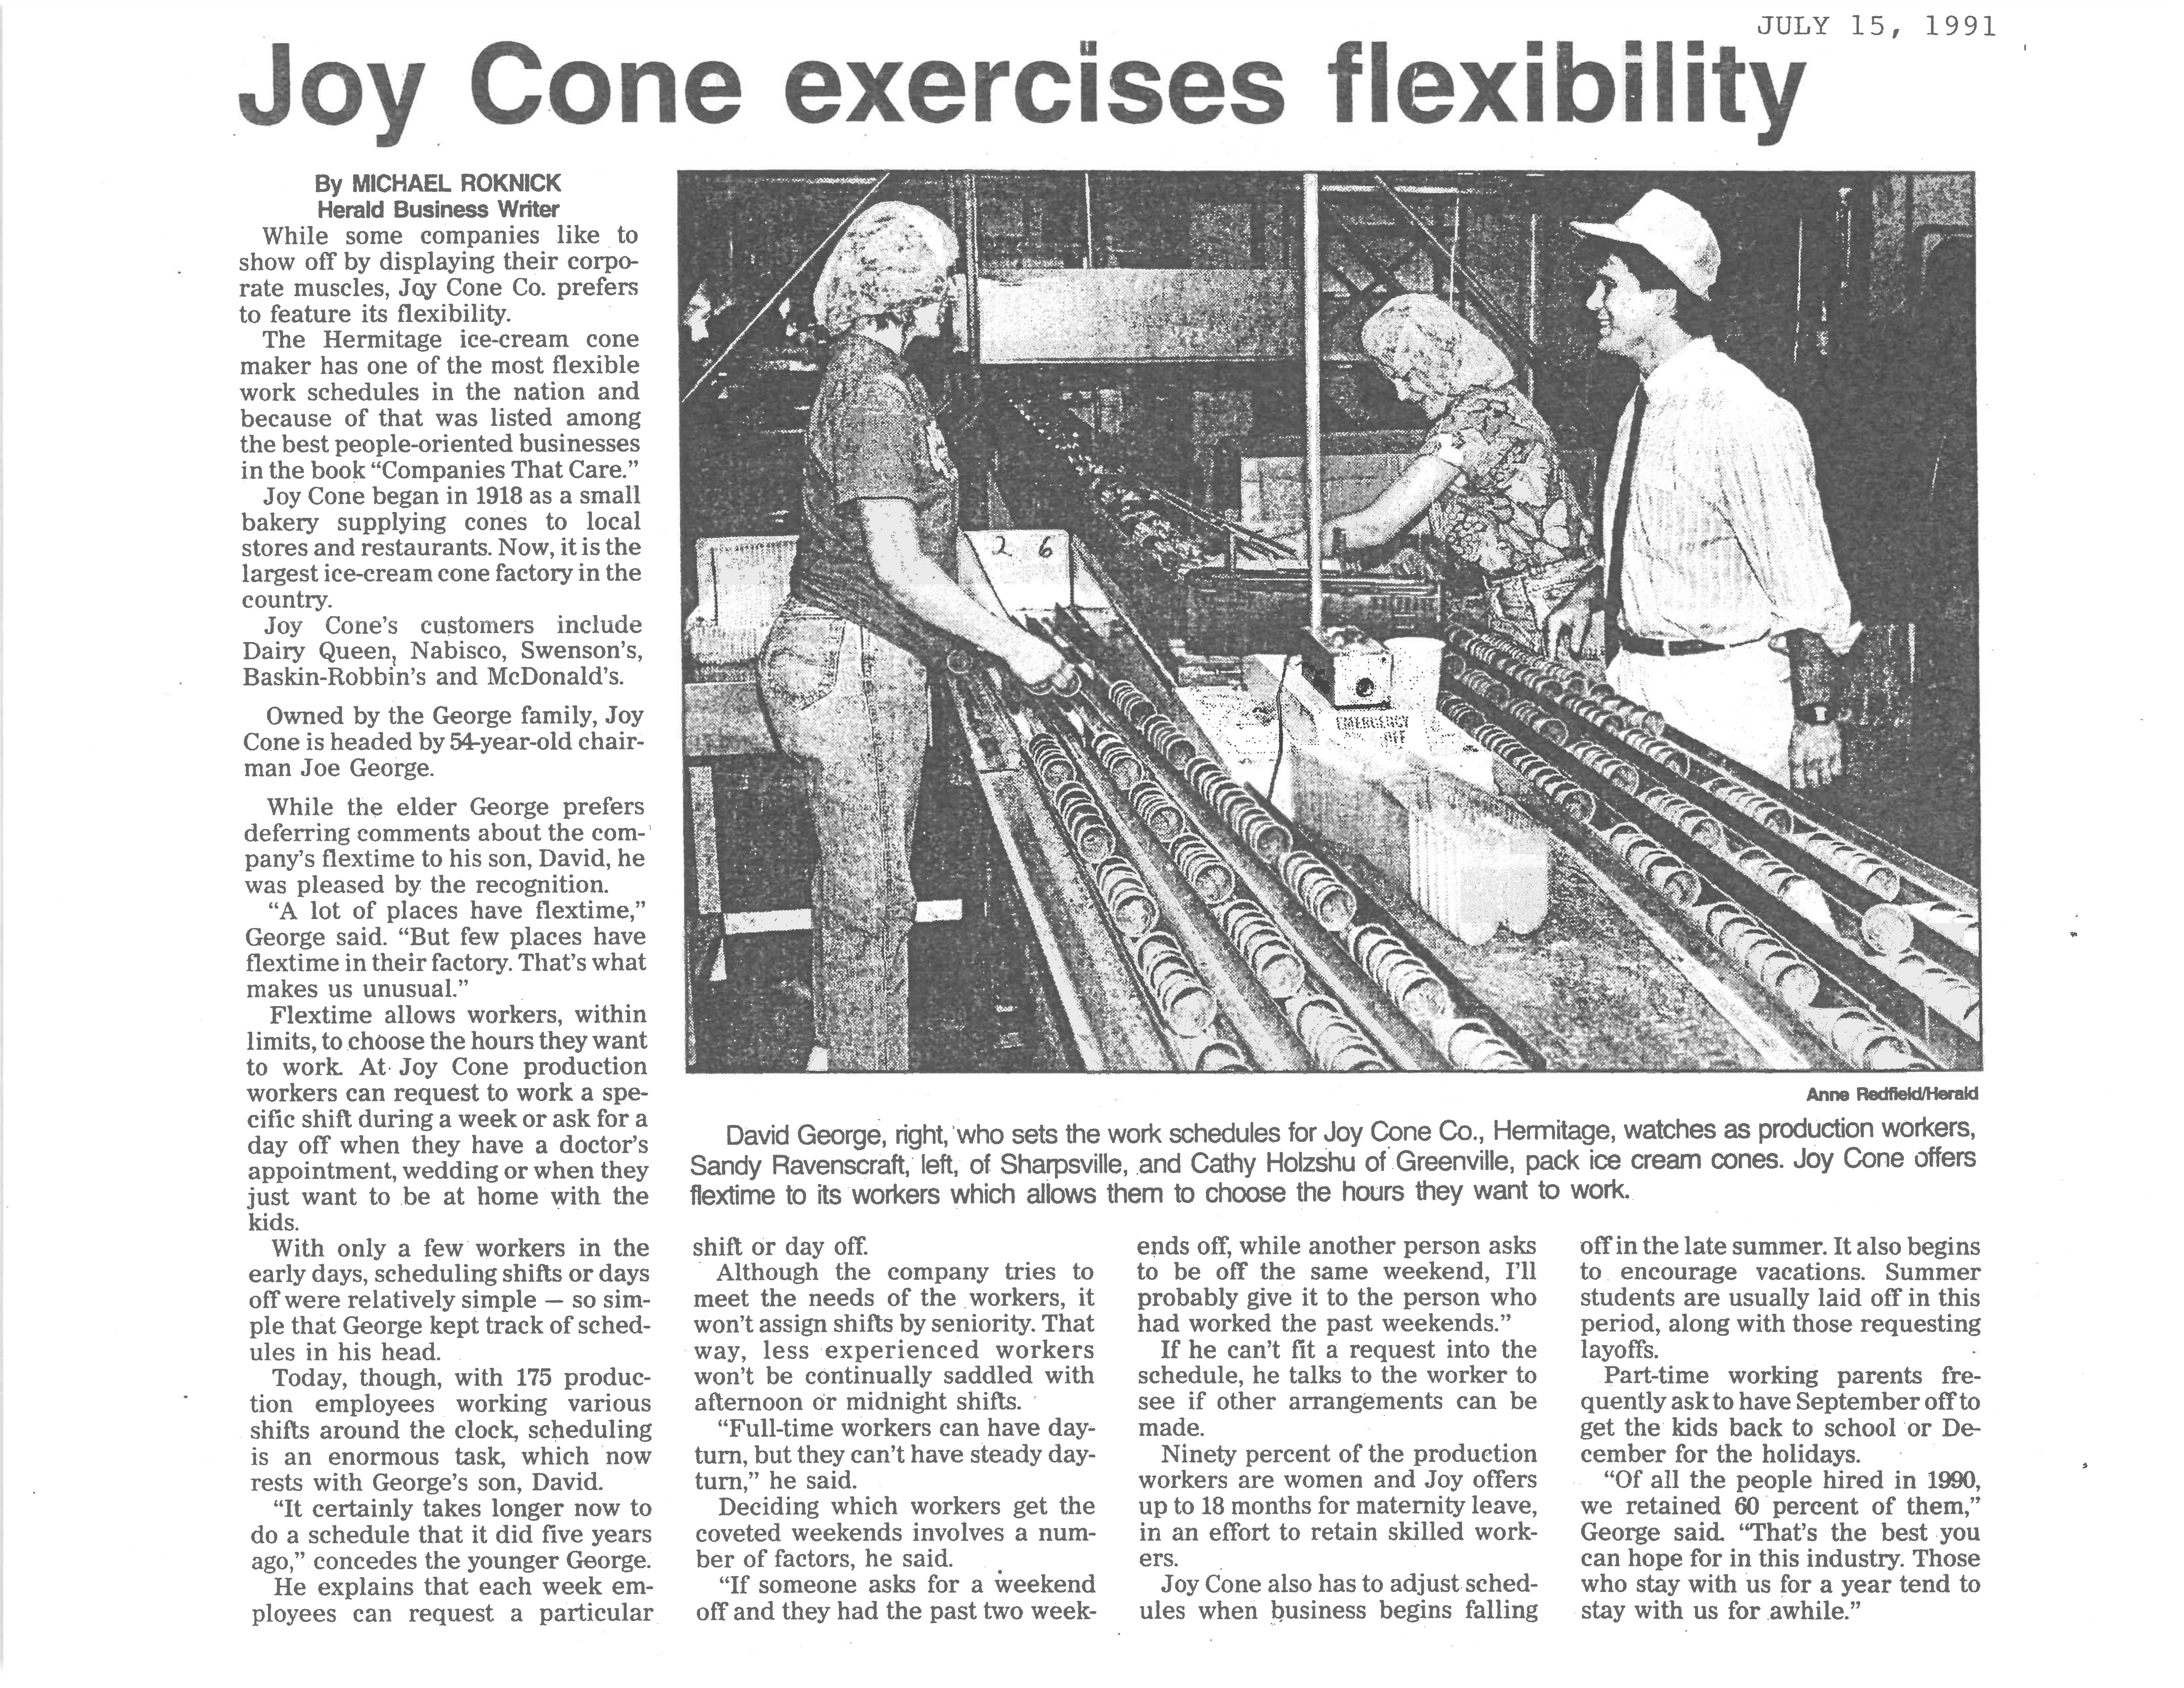 July 15, 1991 Herald Newspaper Article, "Joy Cone exercises flexibility"